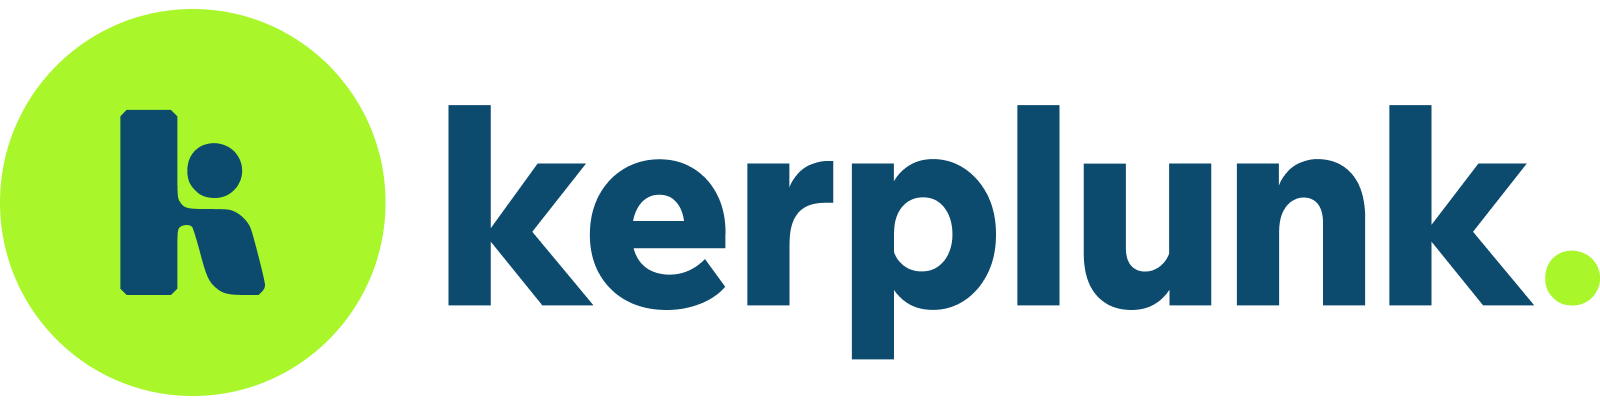 Kerplunk-Logo-blk.png